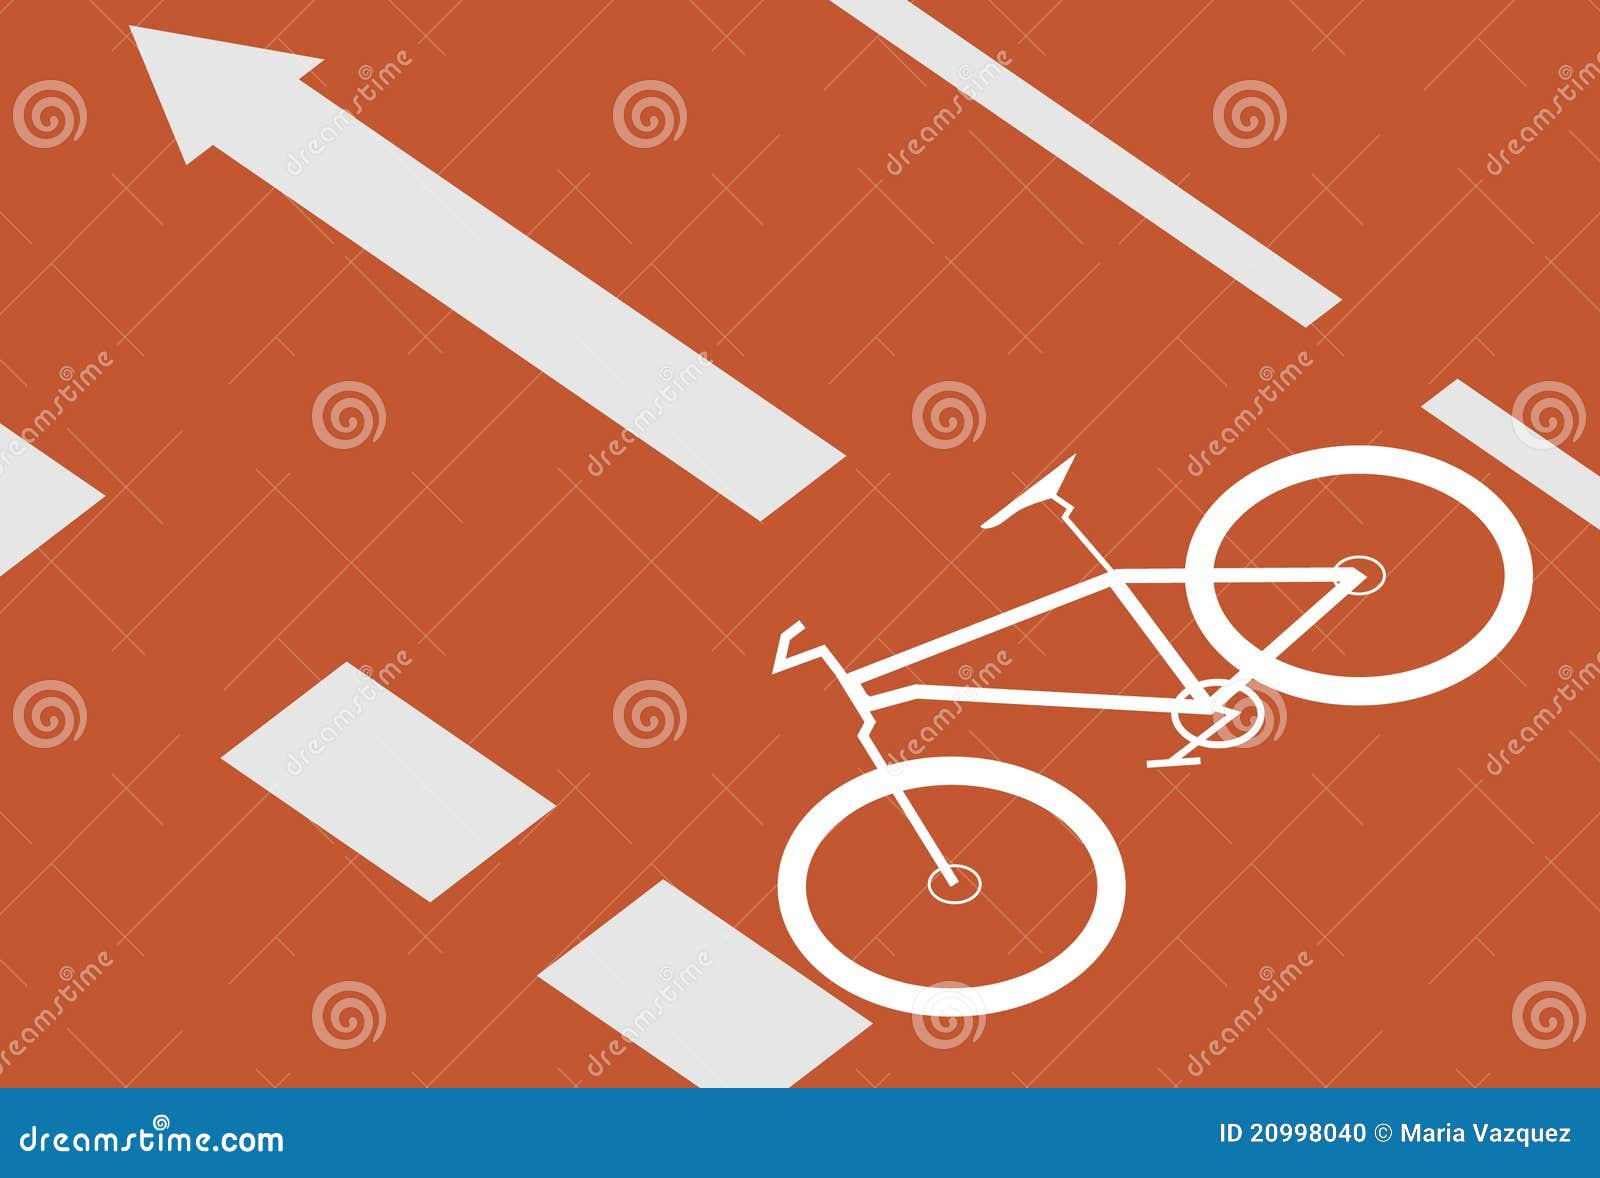 bike lane clipart - photo #11